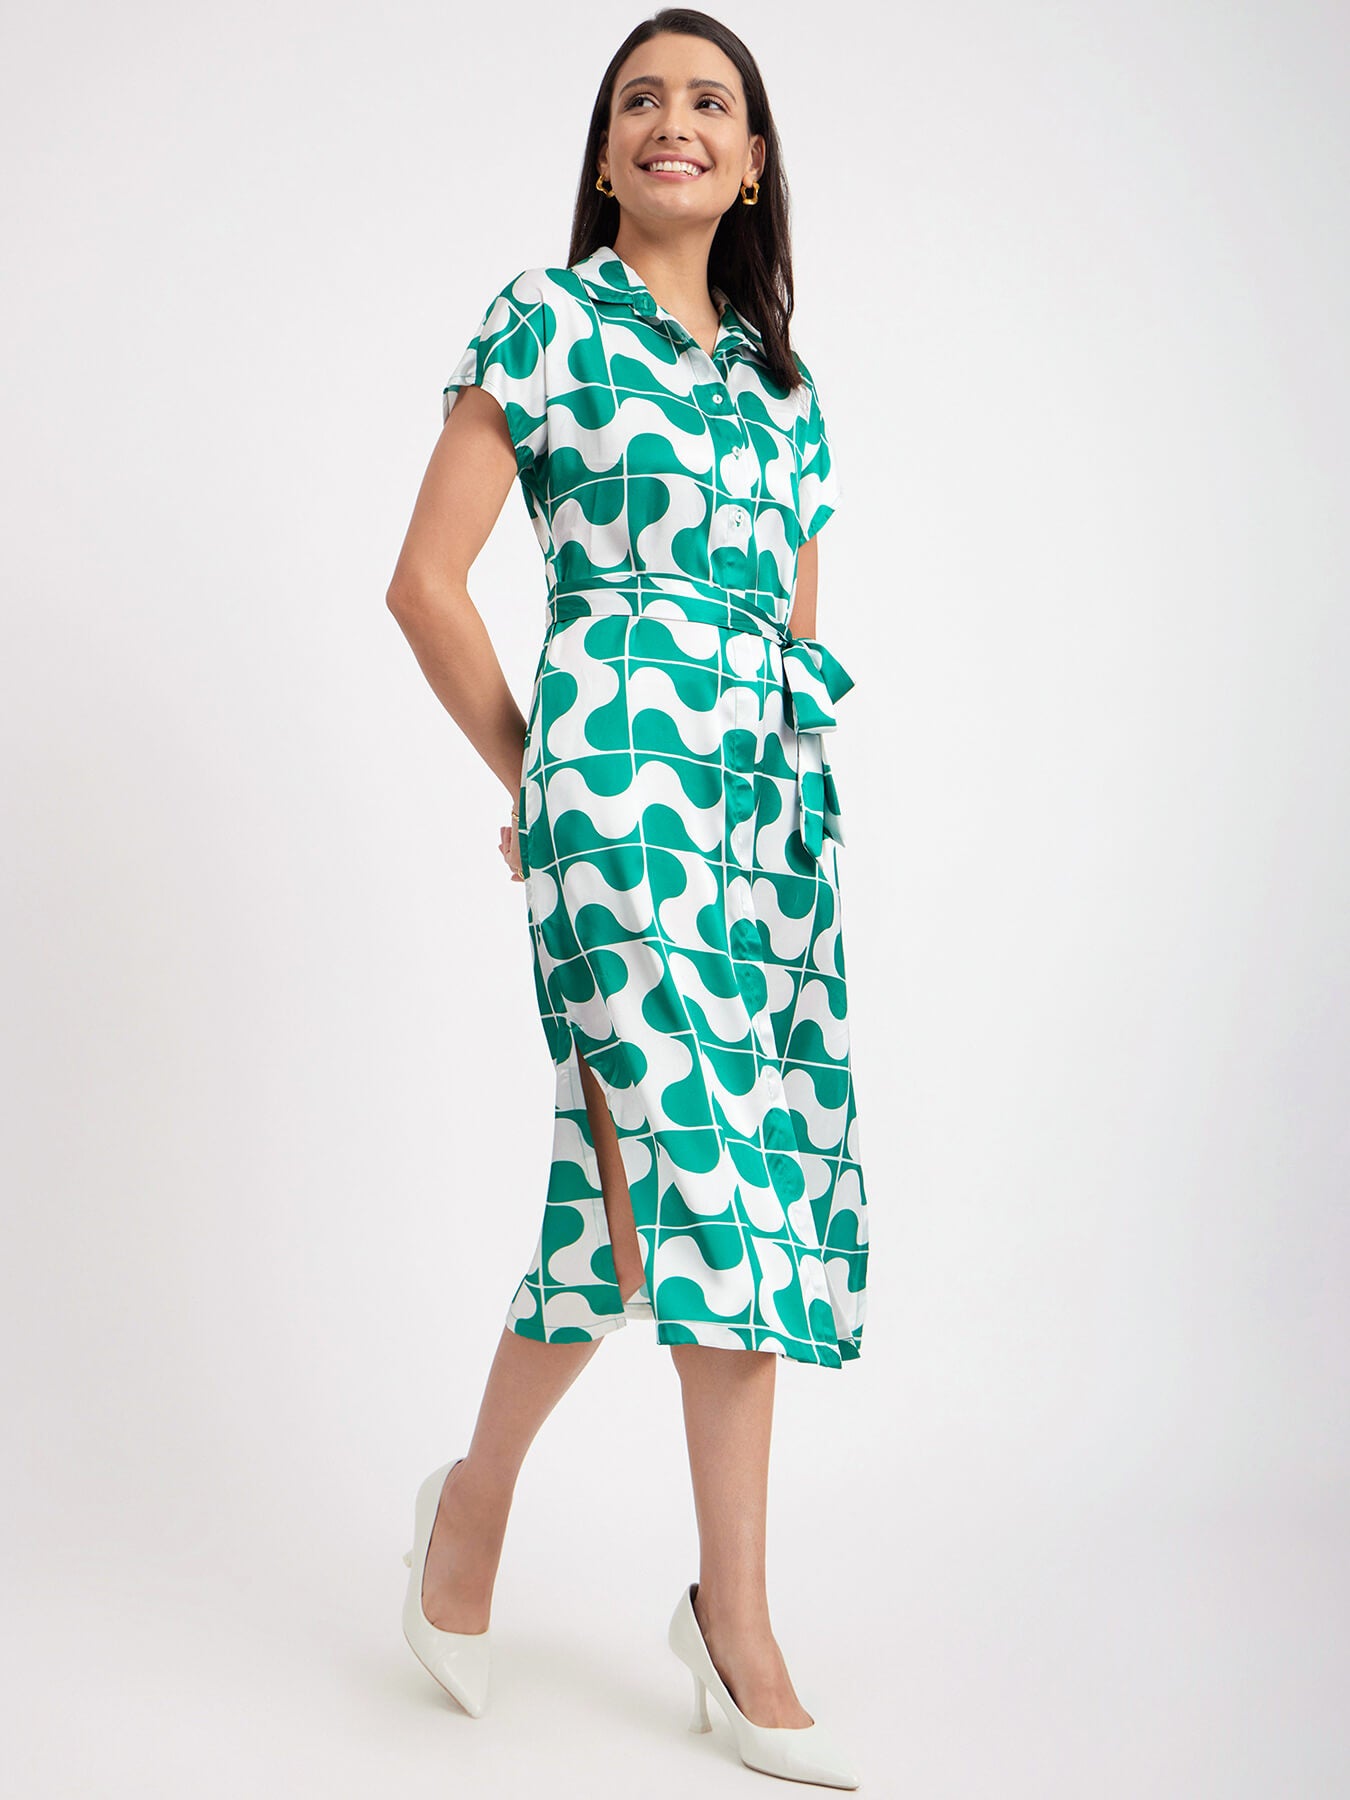 Satin Geometric Print Dress - Green And White